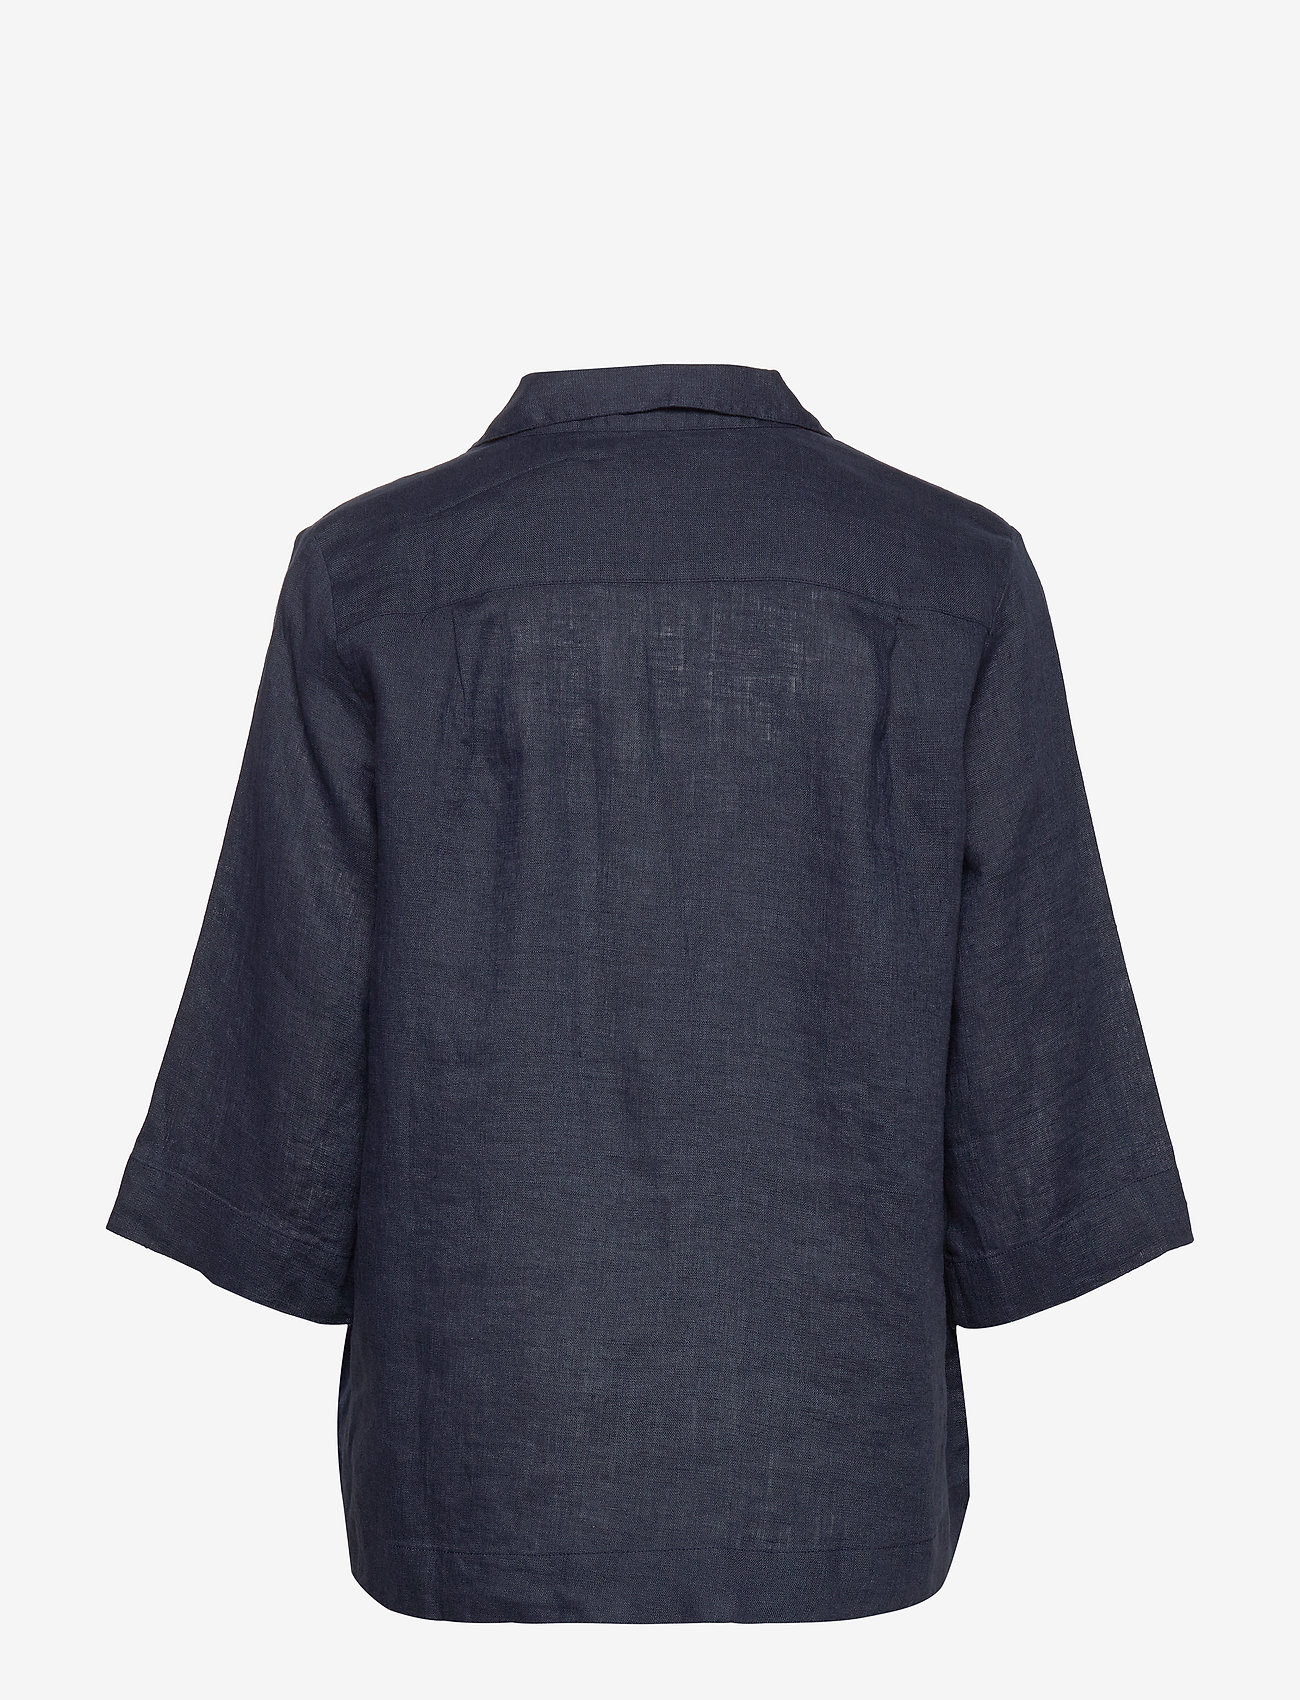 Morris Lady - Marseille Linen Blouse - short-sleeved blouses - blue - 1